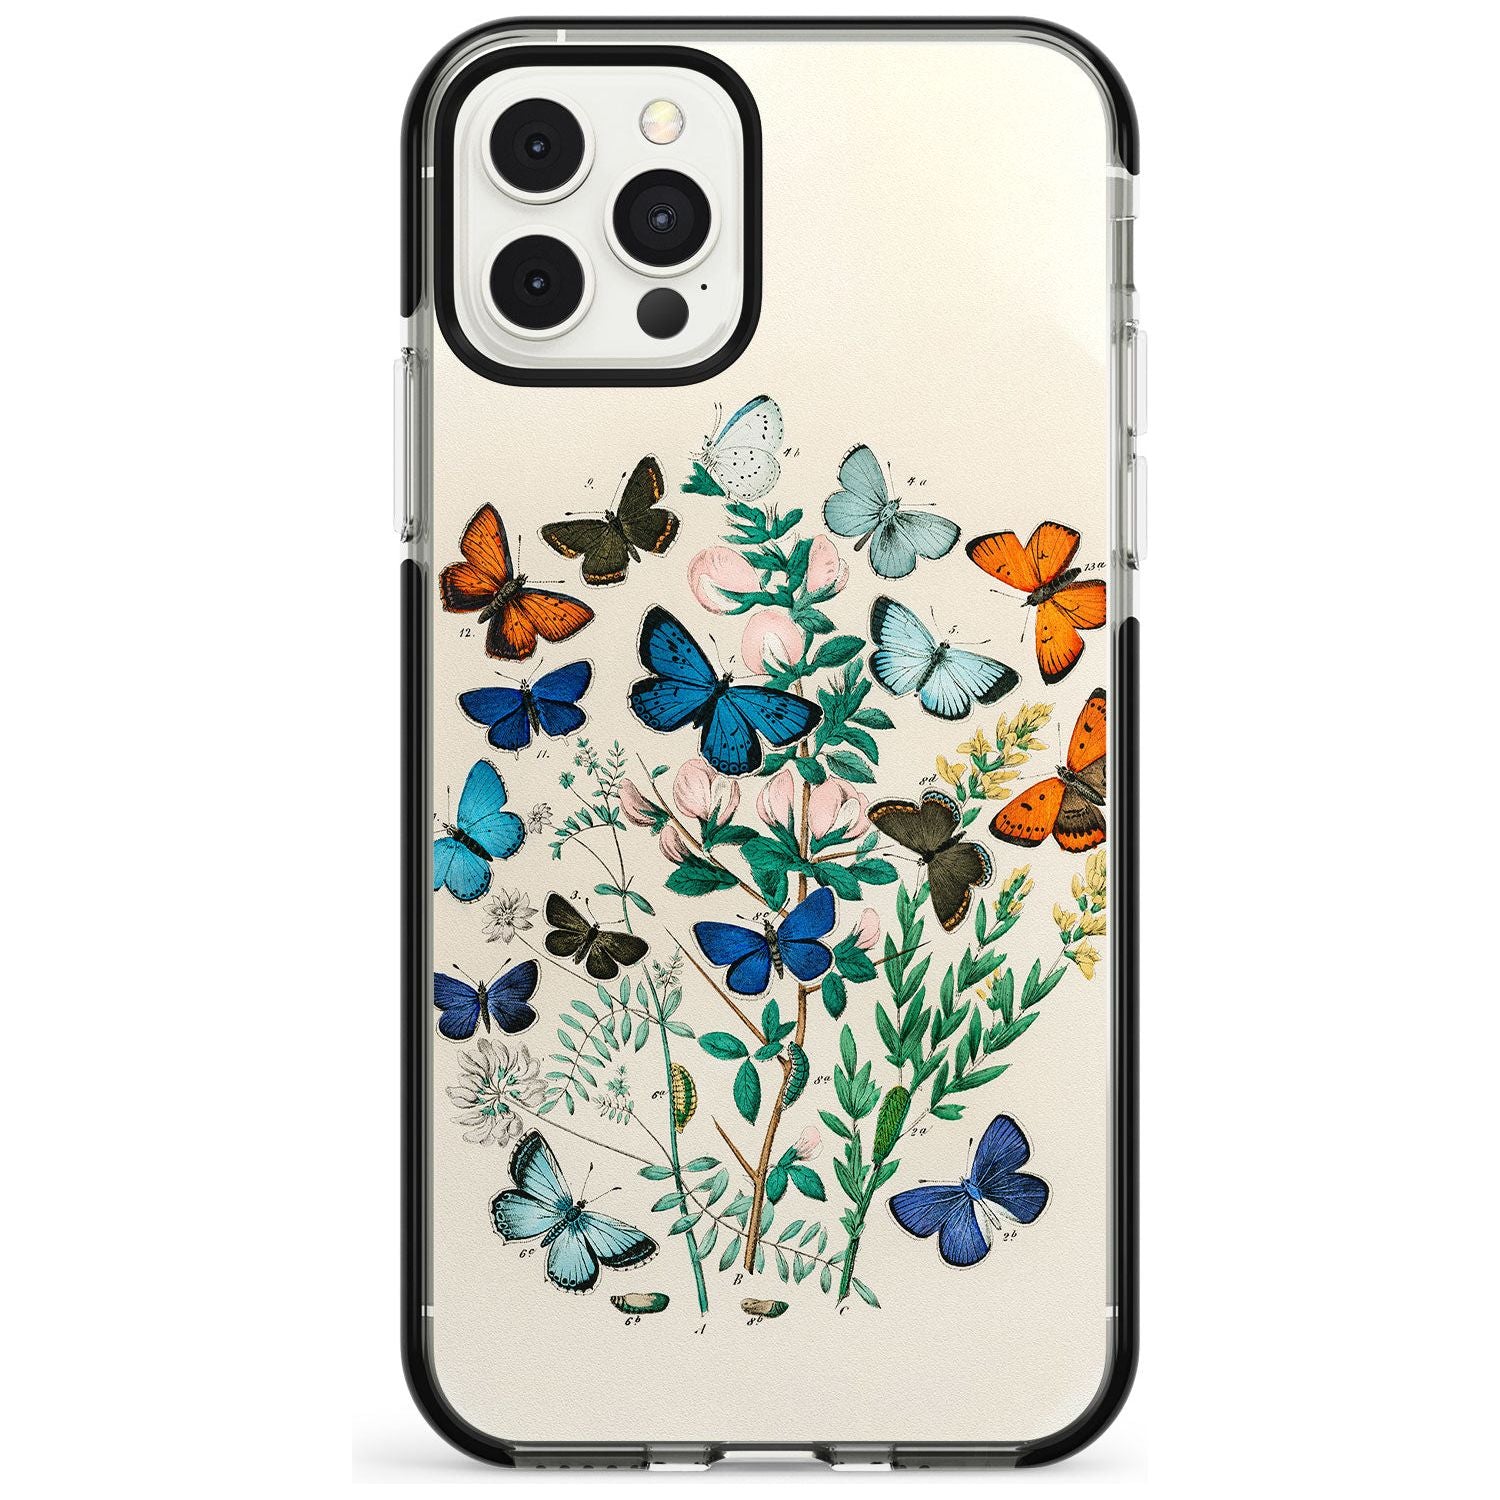 European Butterflies Black Impact Phone Case for iPhone 11